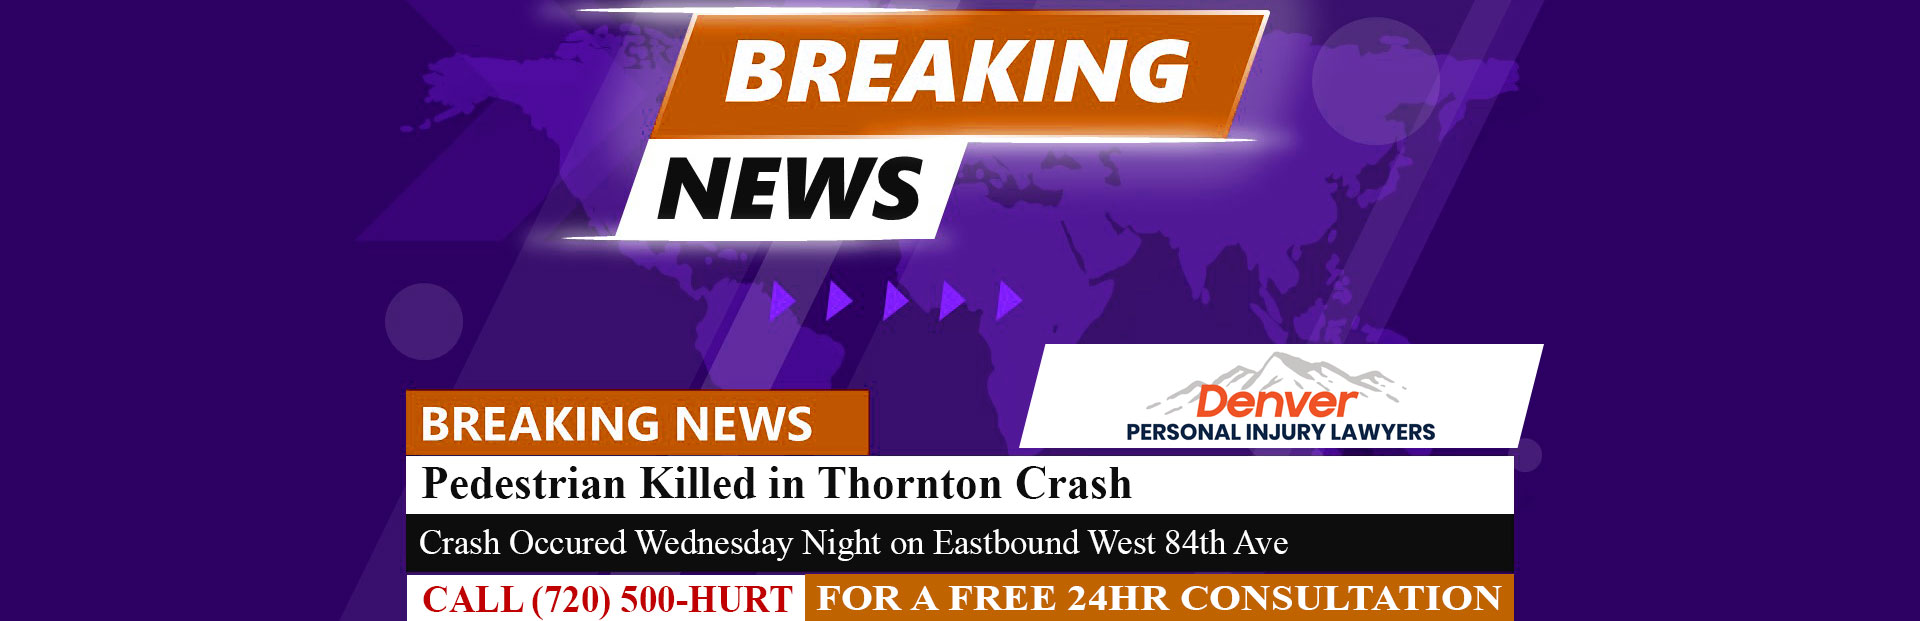 [5-19-22] Pedestrian Killed in Thornton Crash